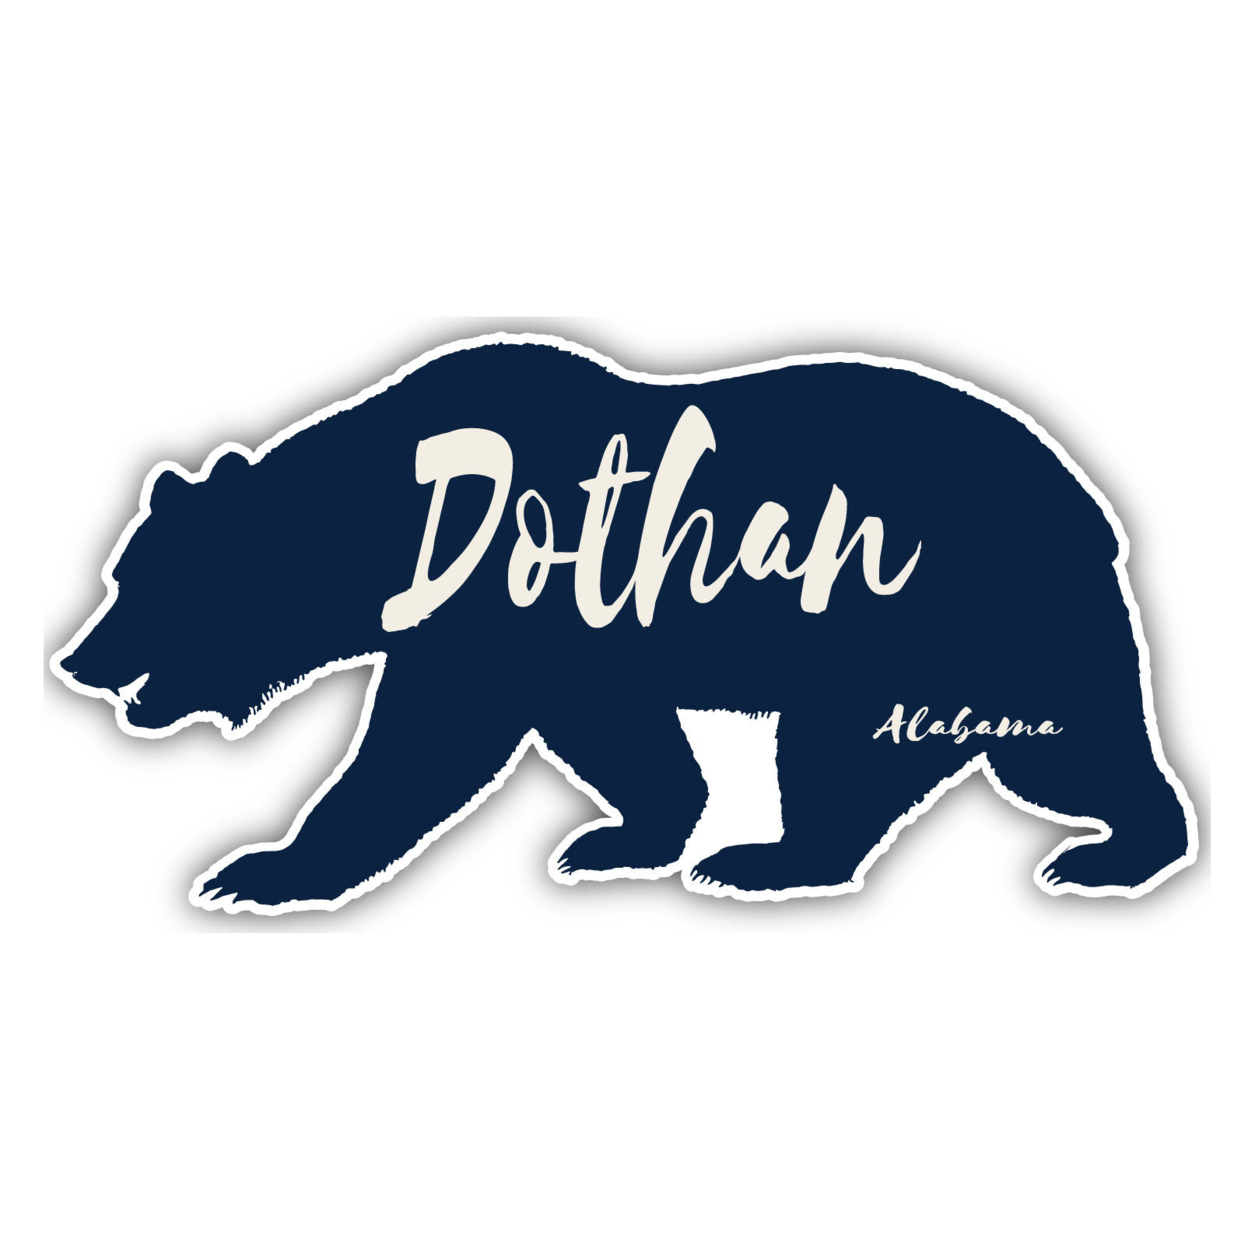 Dothan Alabama Souvenir Decorative Stickers (Choose Theme And Size) - Single Unit, 10-Inch, Camp Life